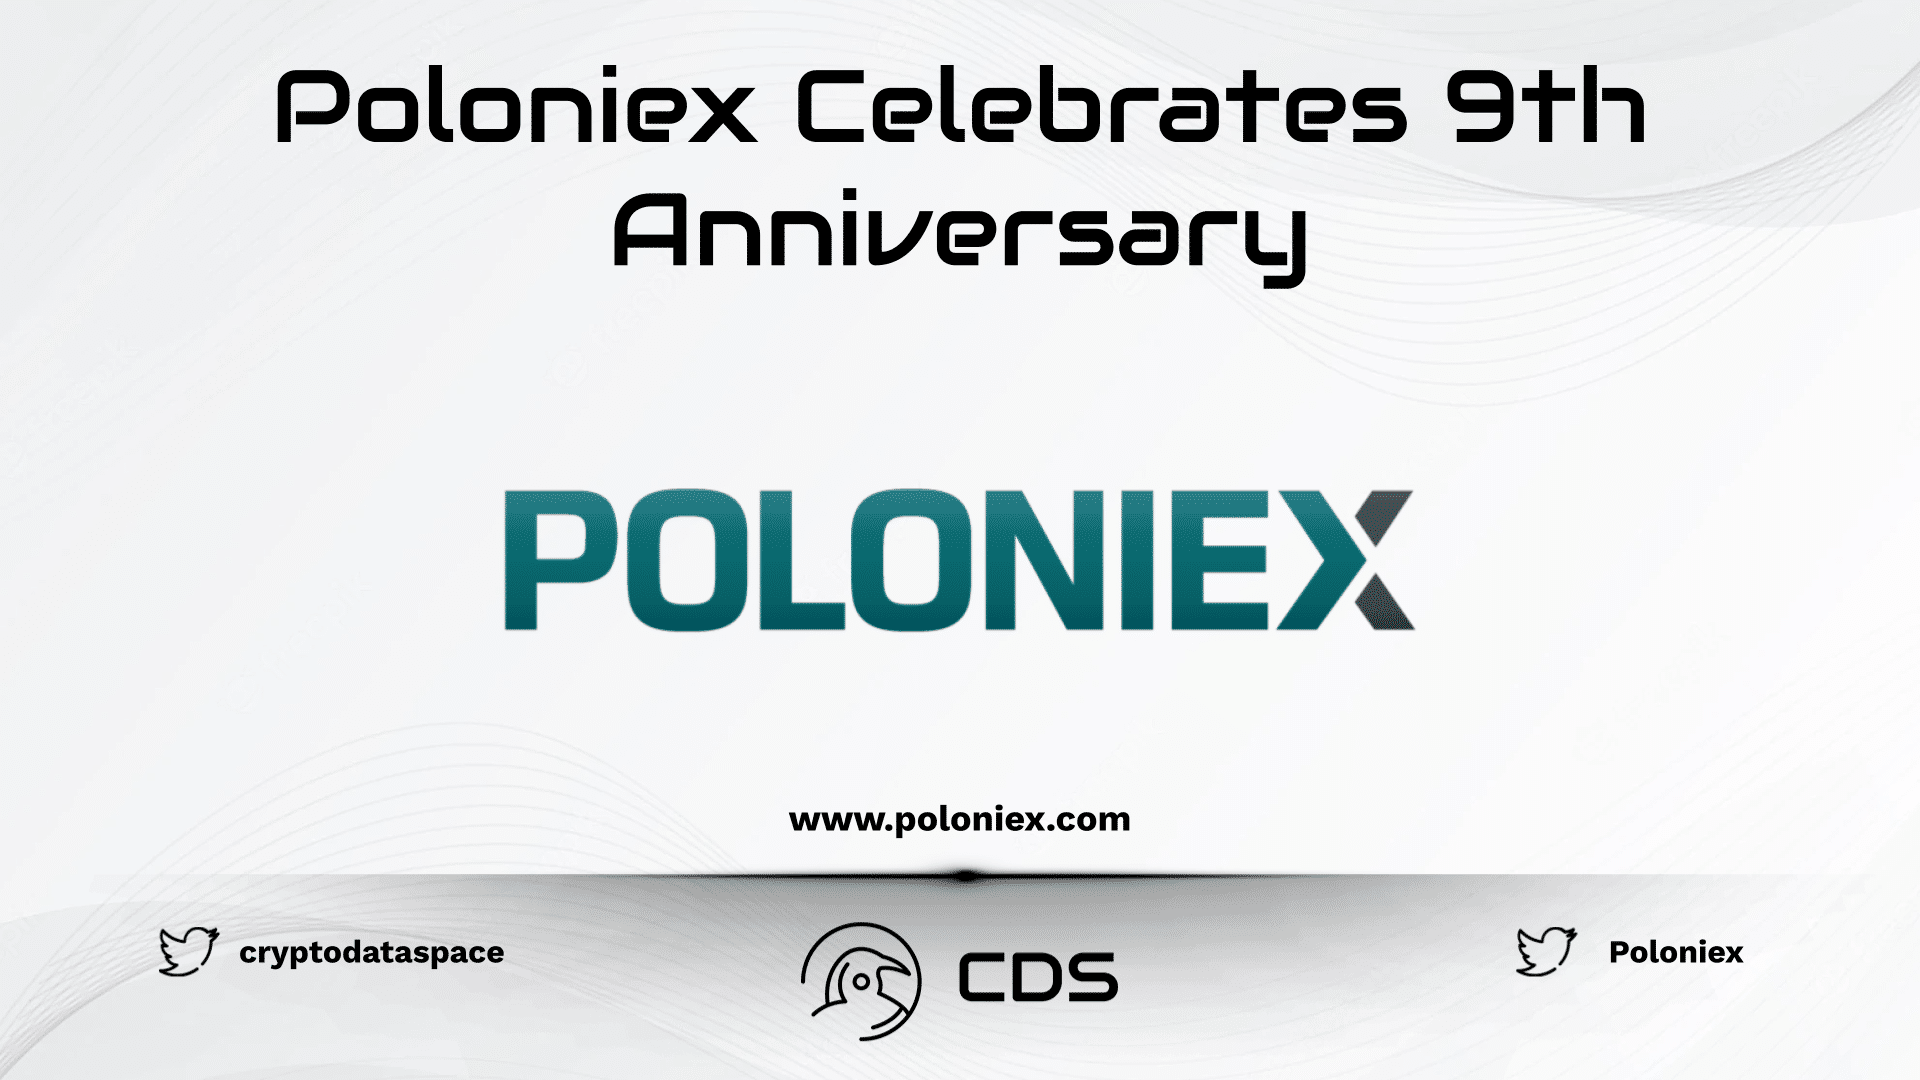 Poloniex Celebrates 9th Anniversary